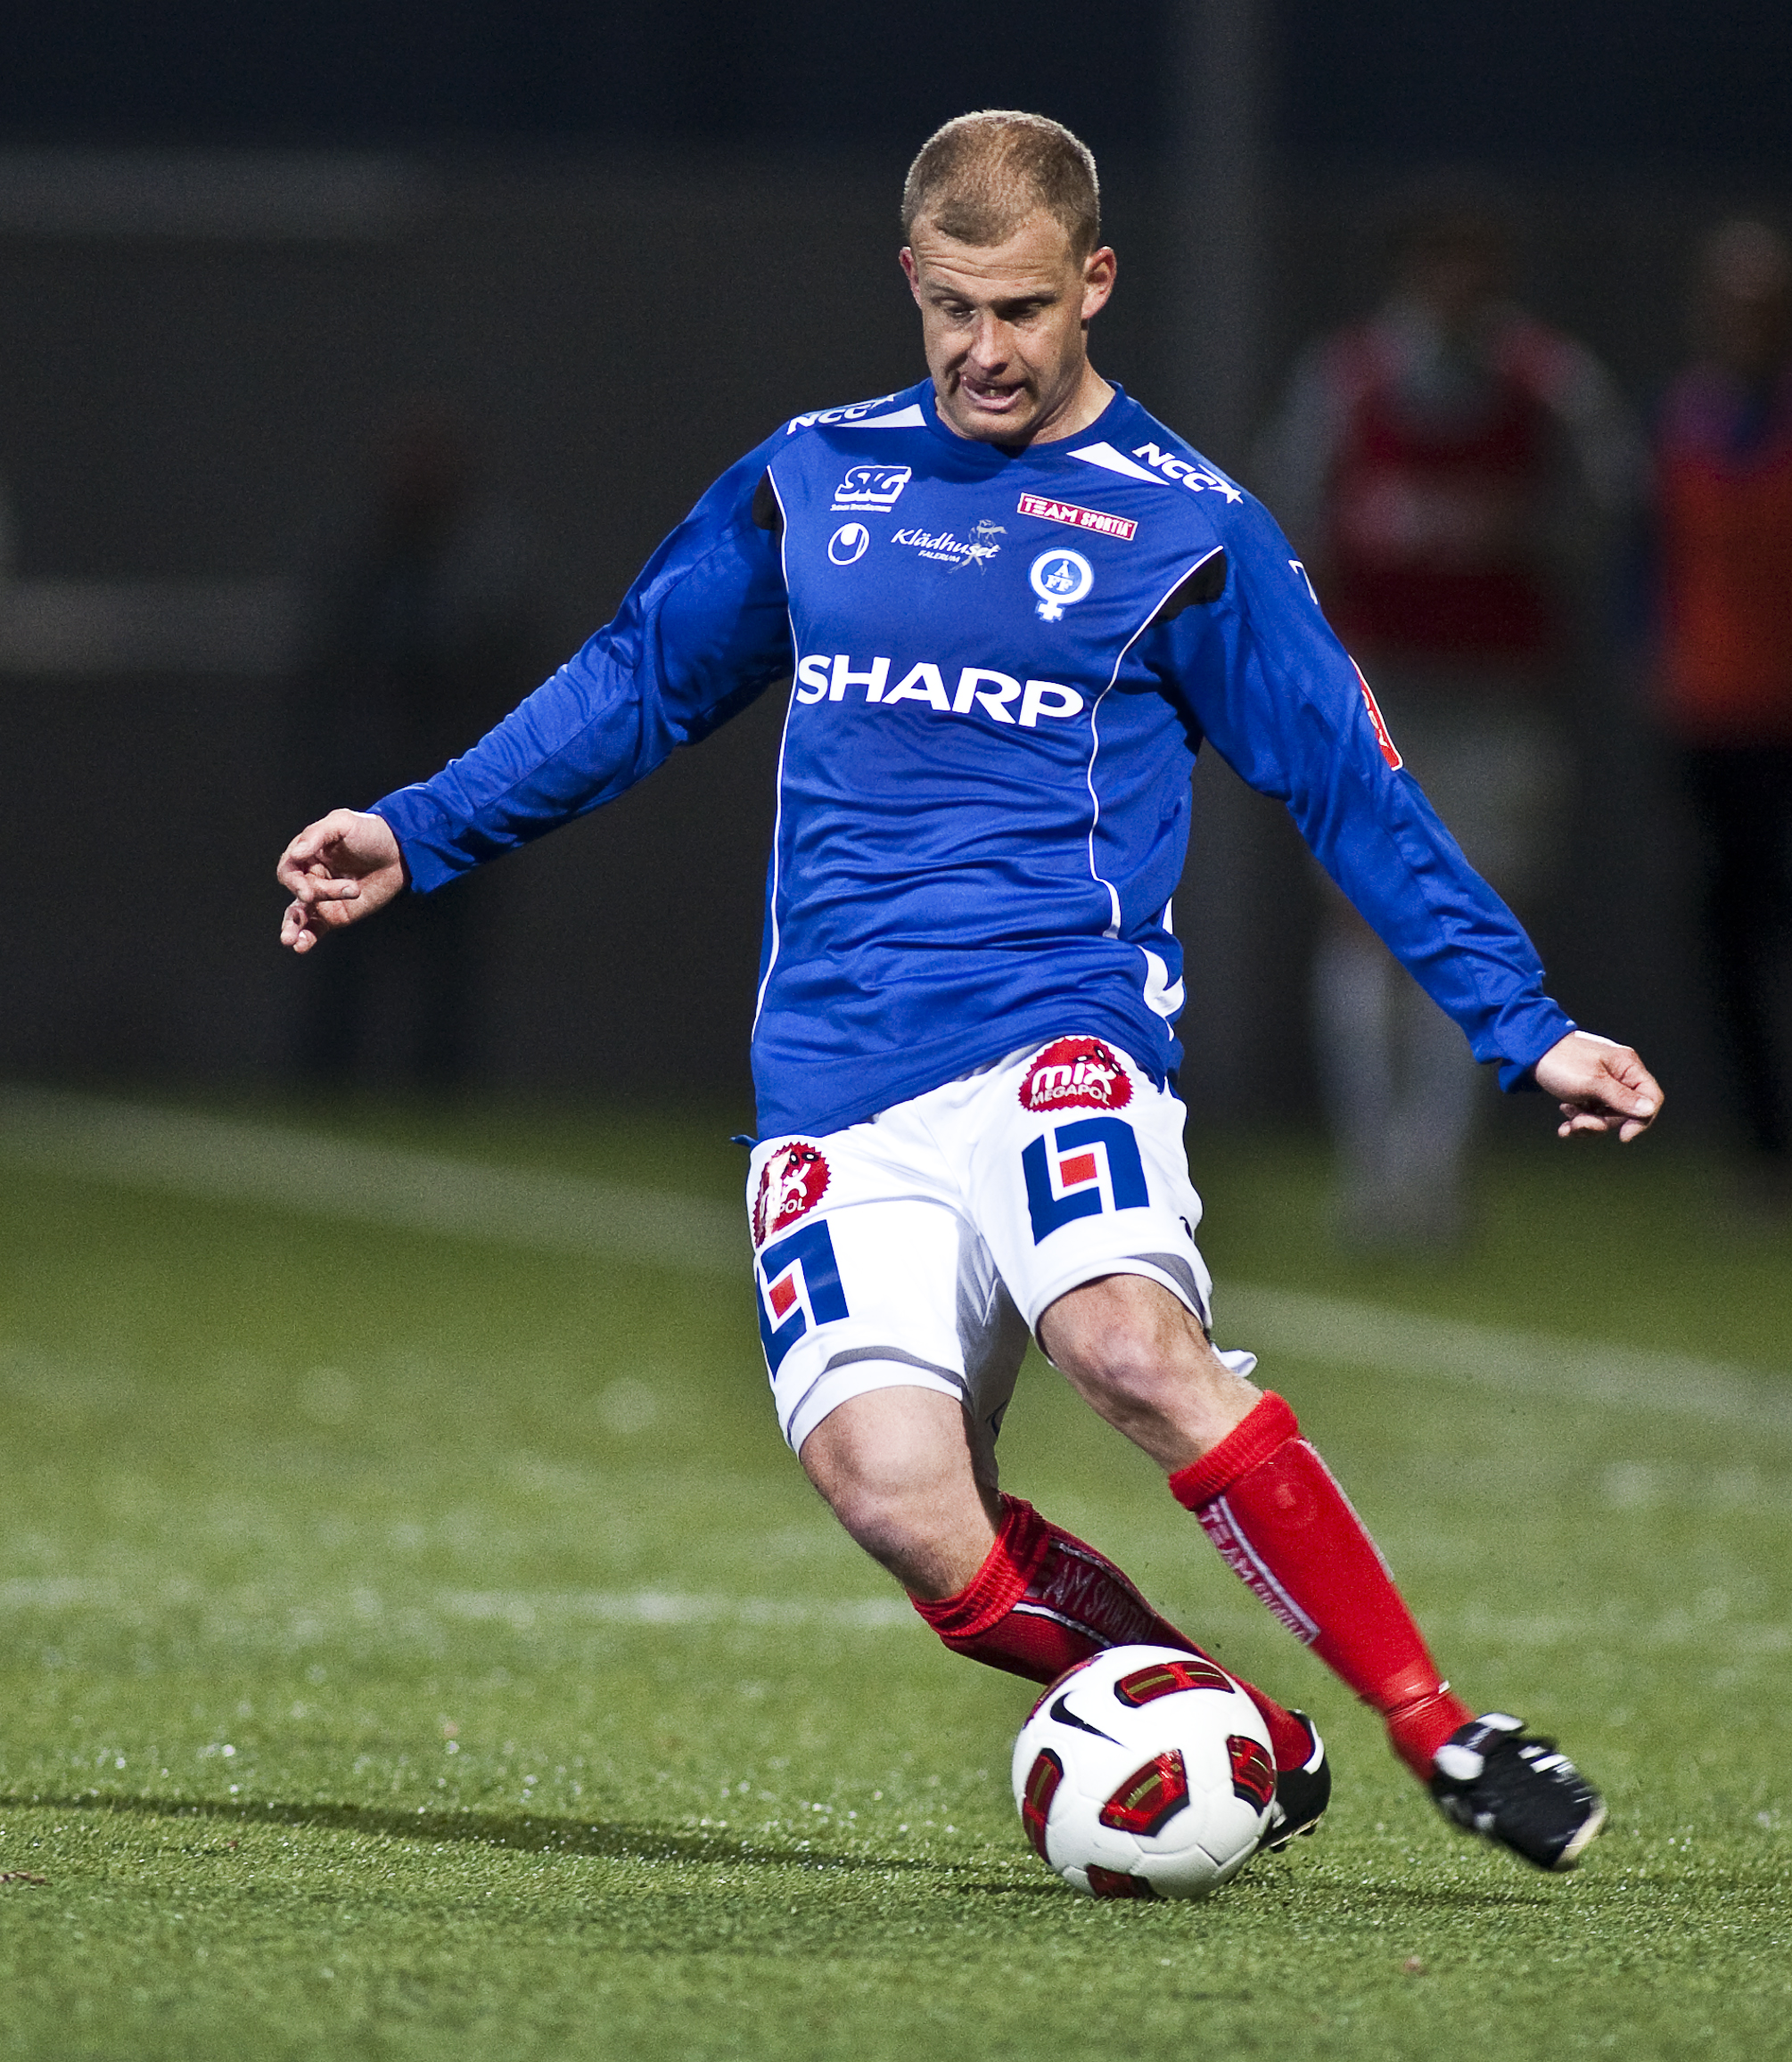 Åtvidaberg, Kristian Bergström, Allsvenskan, Ljungskile